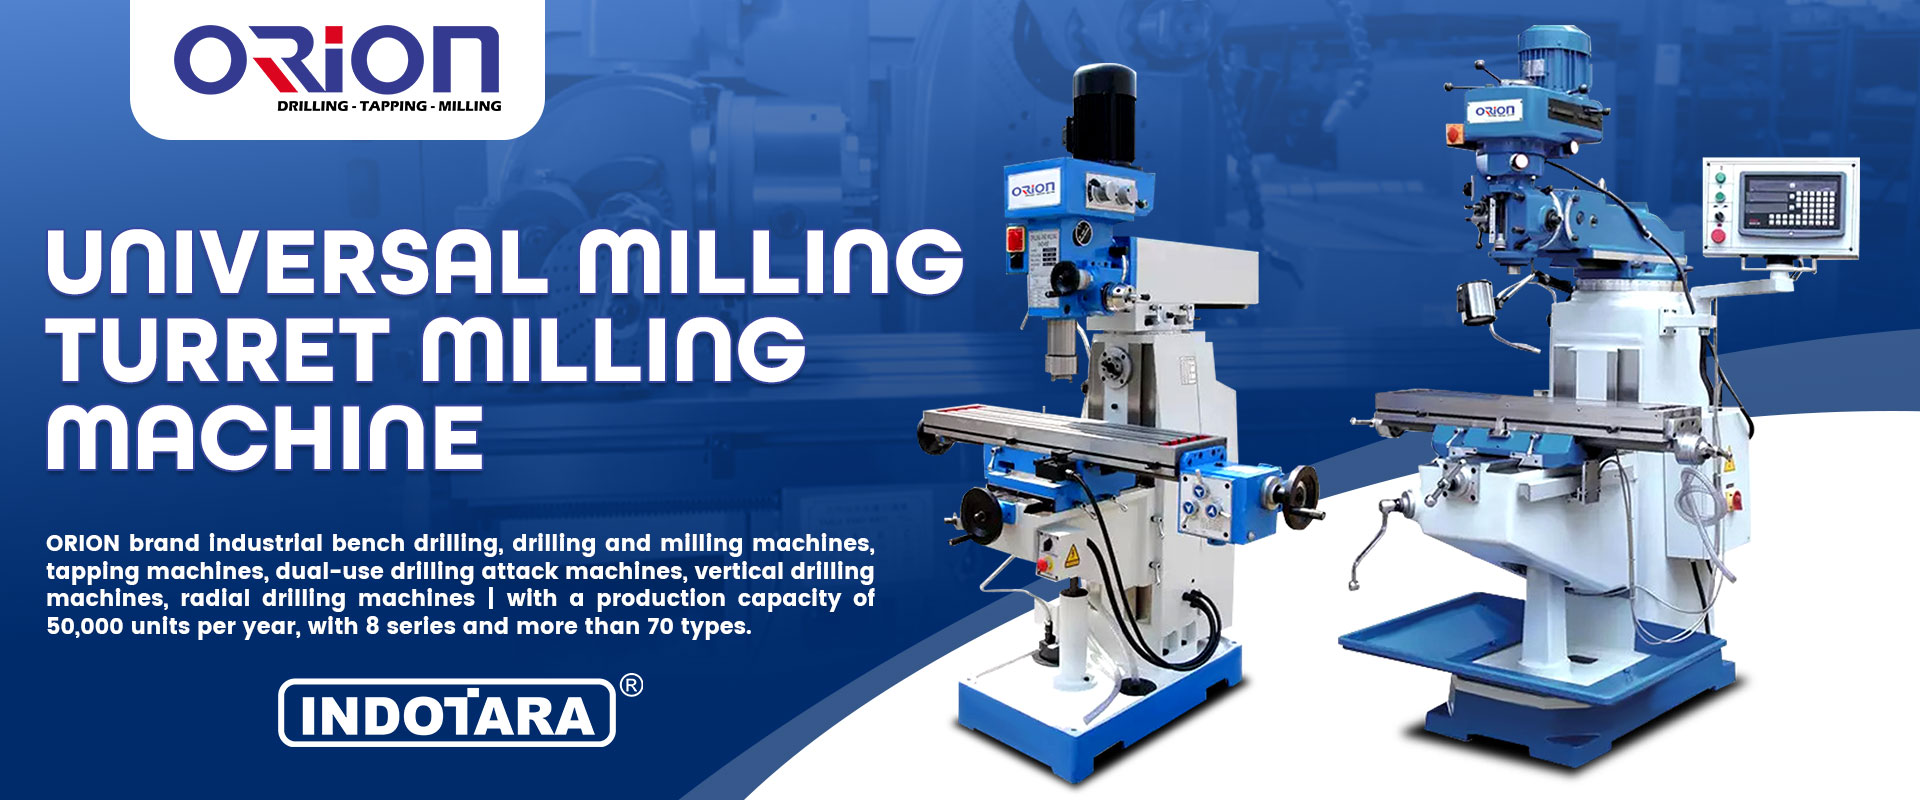 Jual Drilling And Milling Machine, Harga Drilling And Milling Machine, Orion Drilling And Milling machine